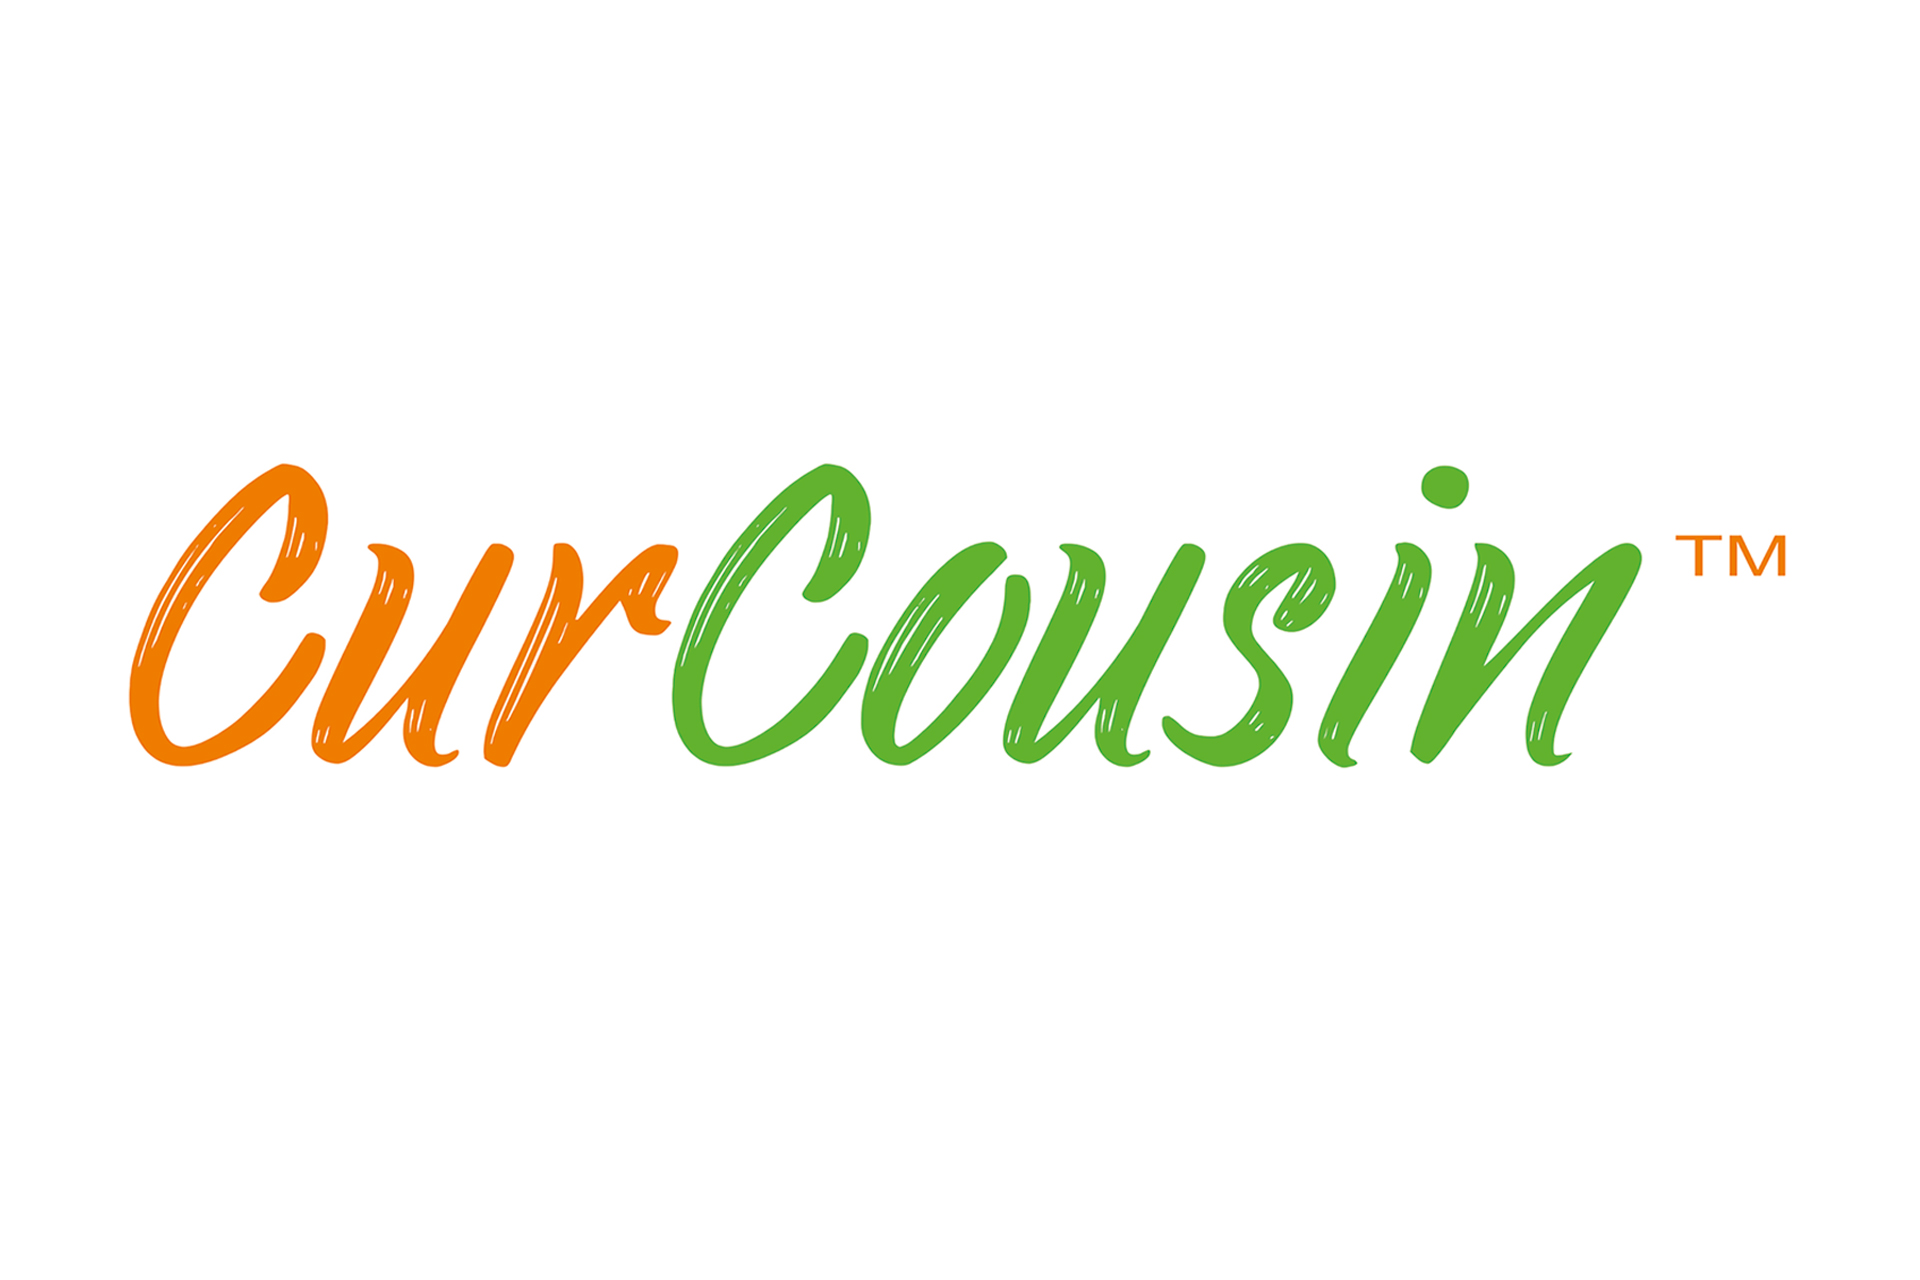 CurCousin logo